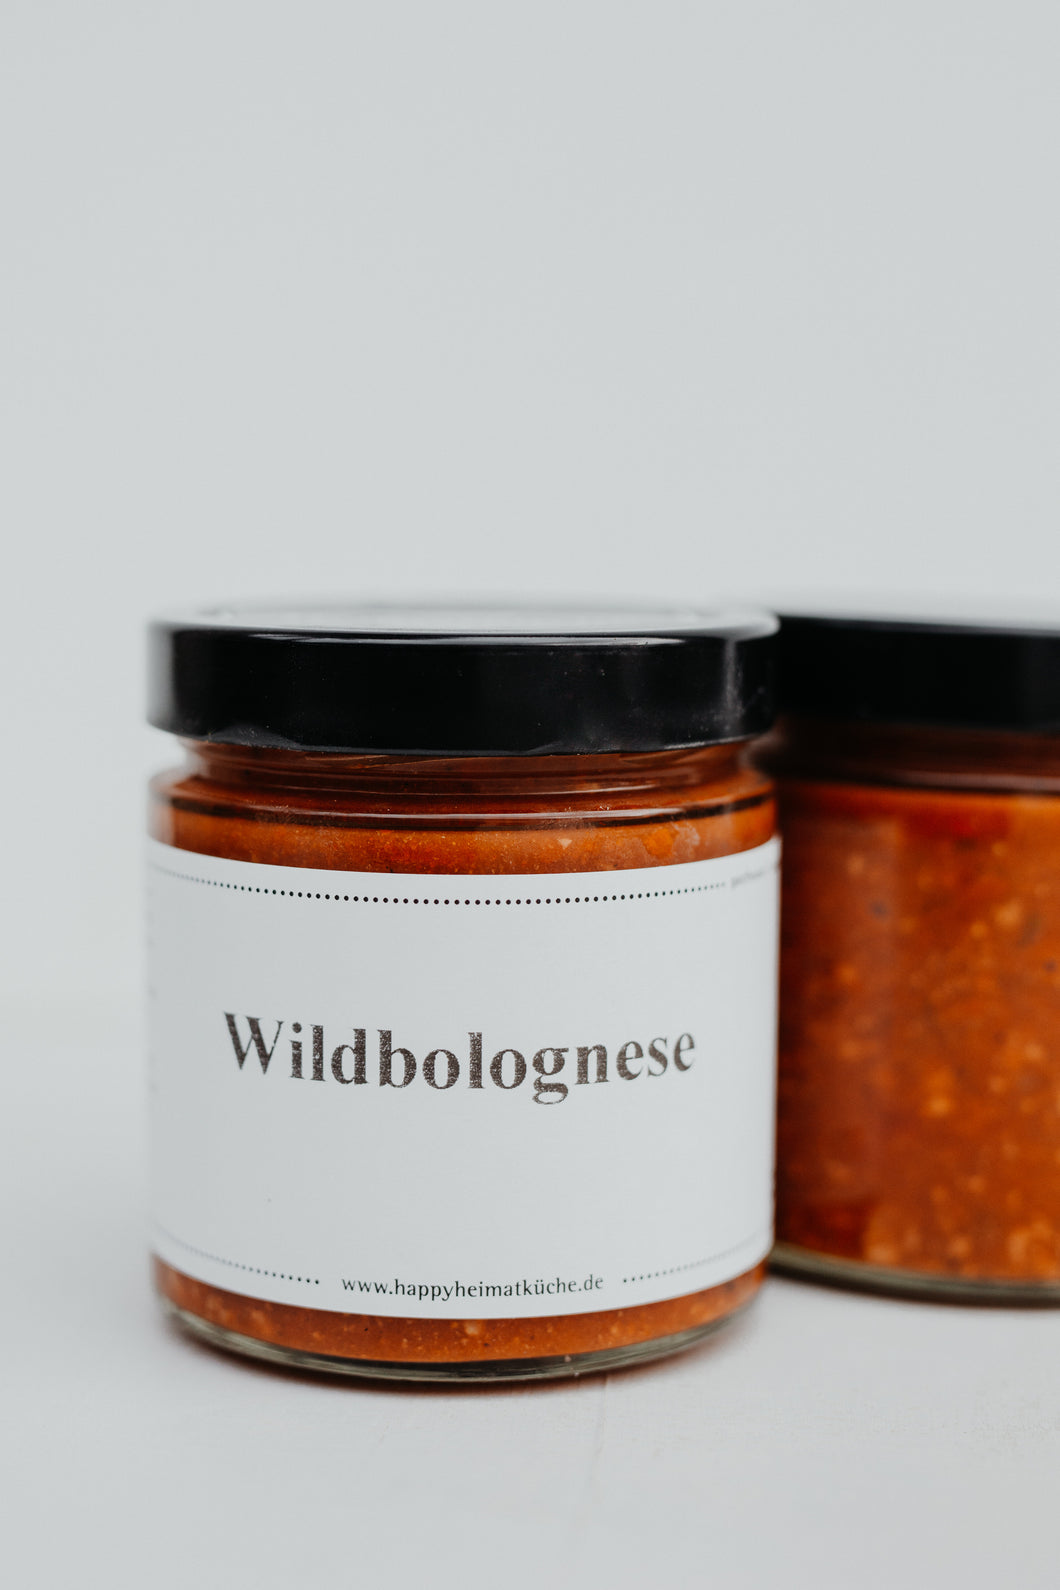 Wildbolognese